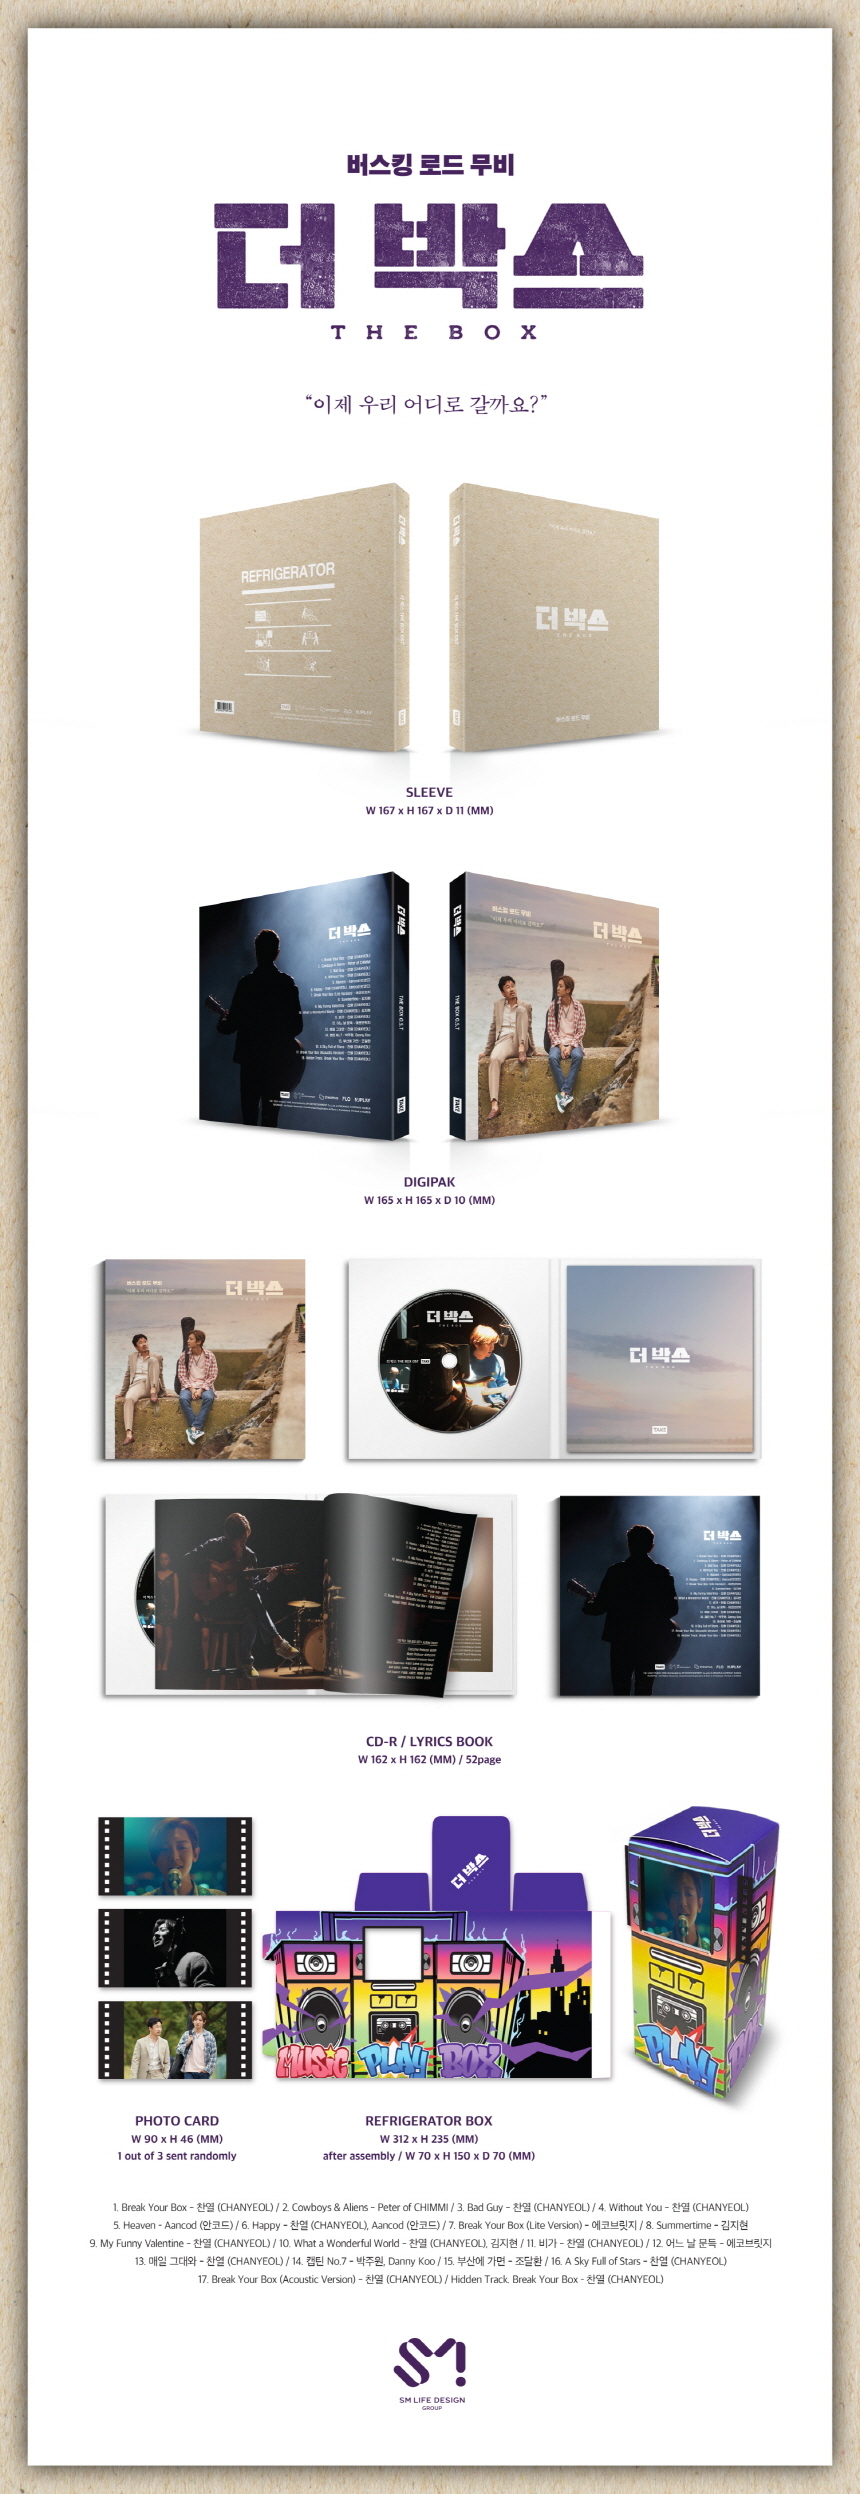 THE BOX OST #Chanyeol #TheBOX #TheBOXalbum #TheBOXOST #OST #SM#Chanyeolalbum #ChanyeolCD